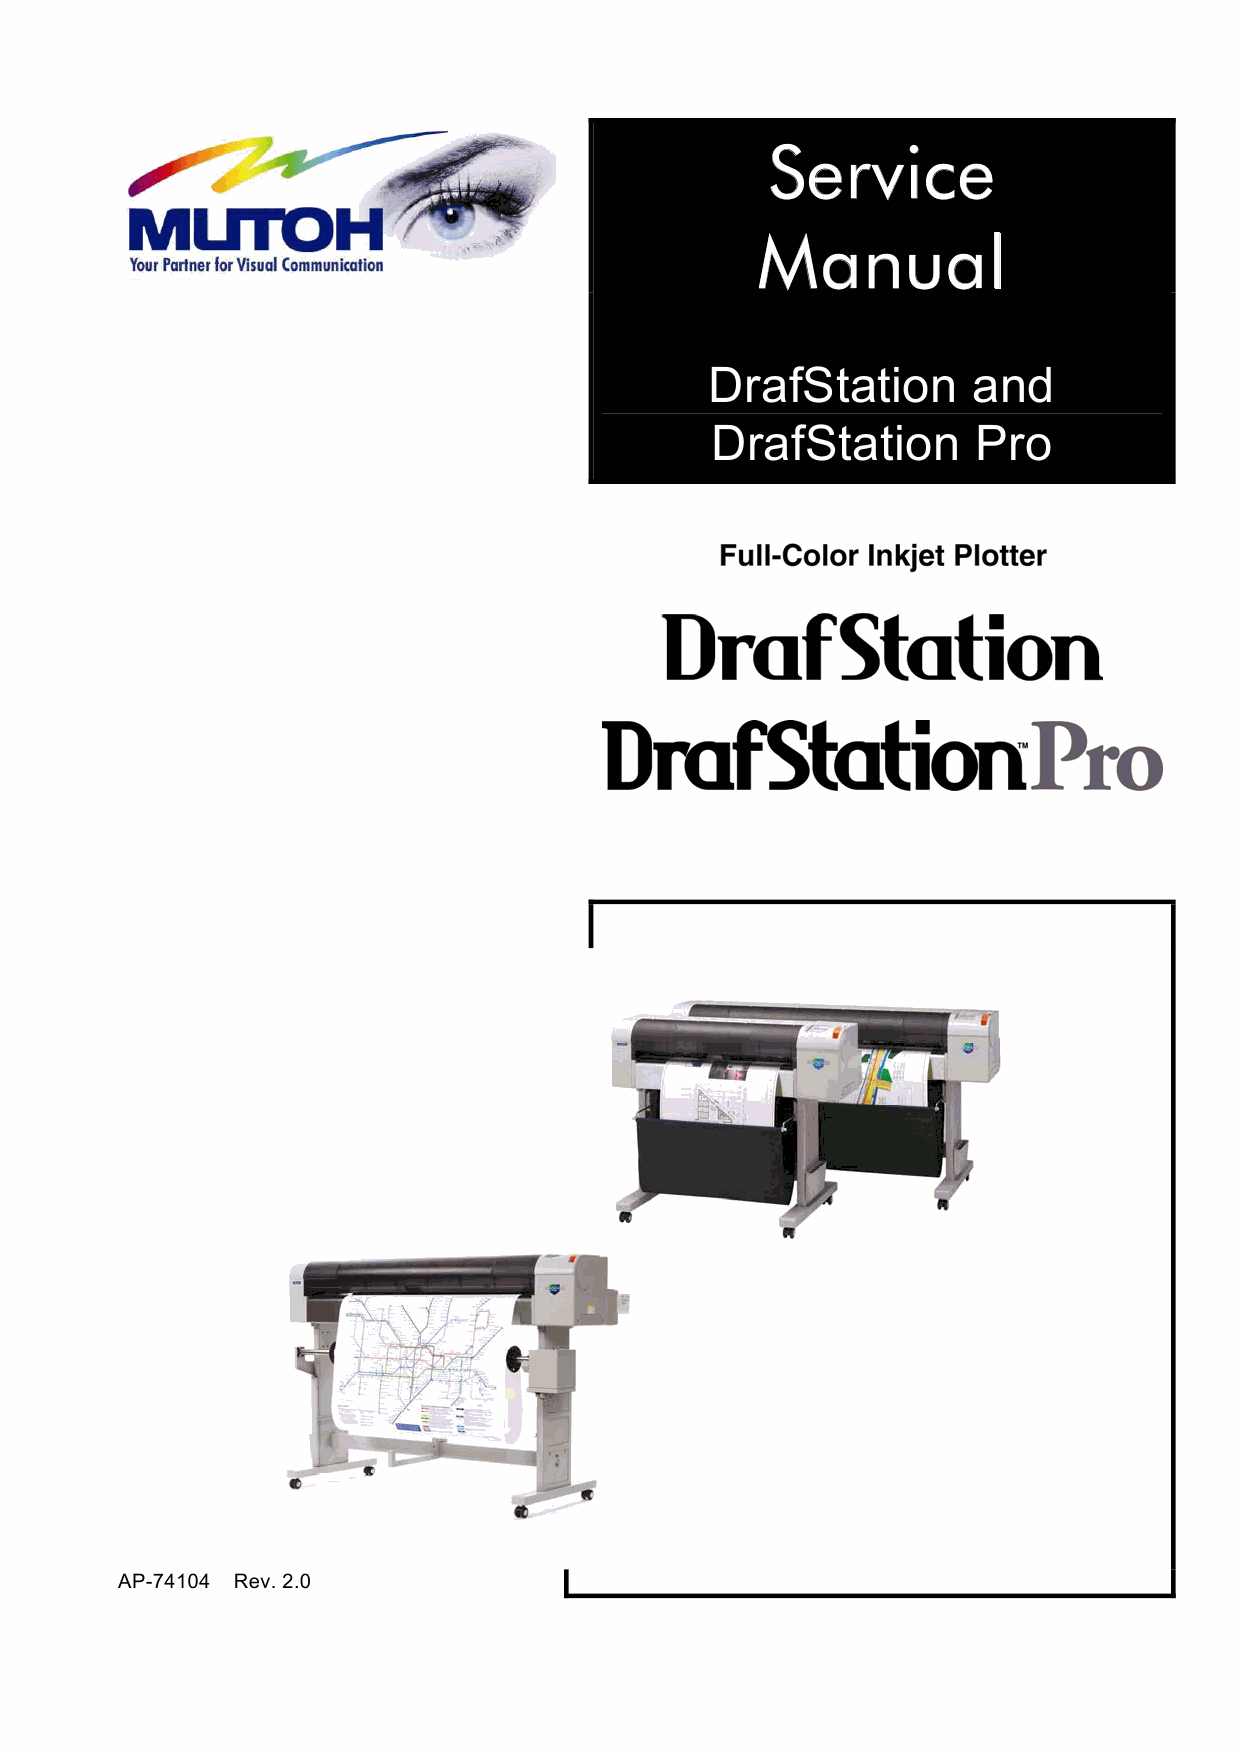 MUTOH RJ 900C RJ901C DrafStation DrafStationPro Service Manual-1